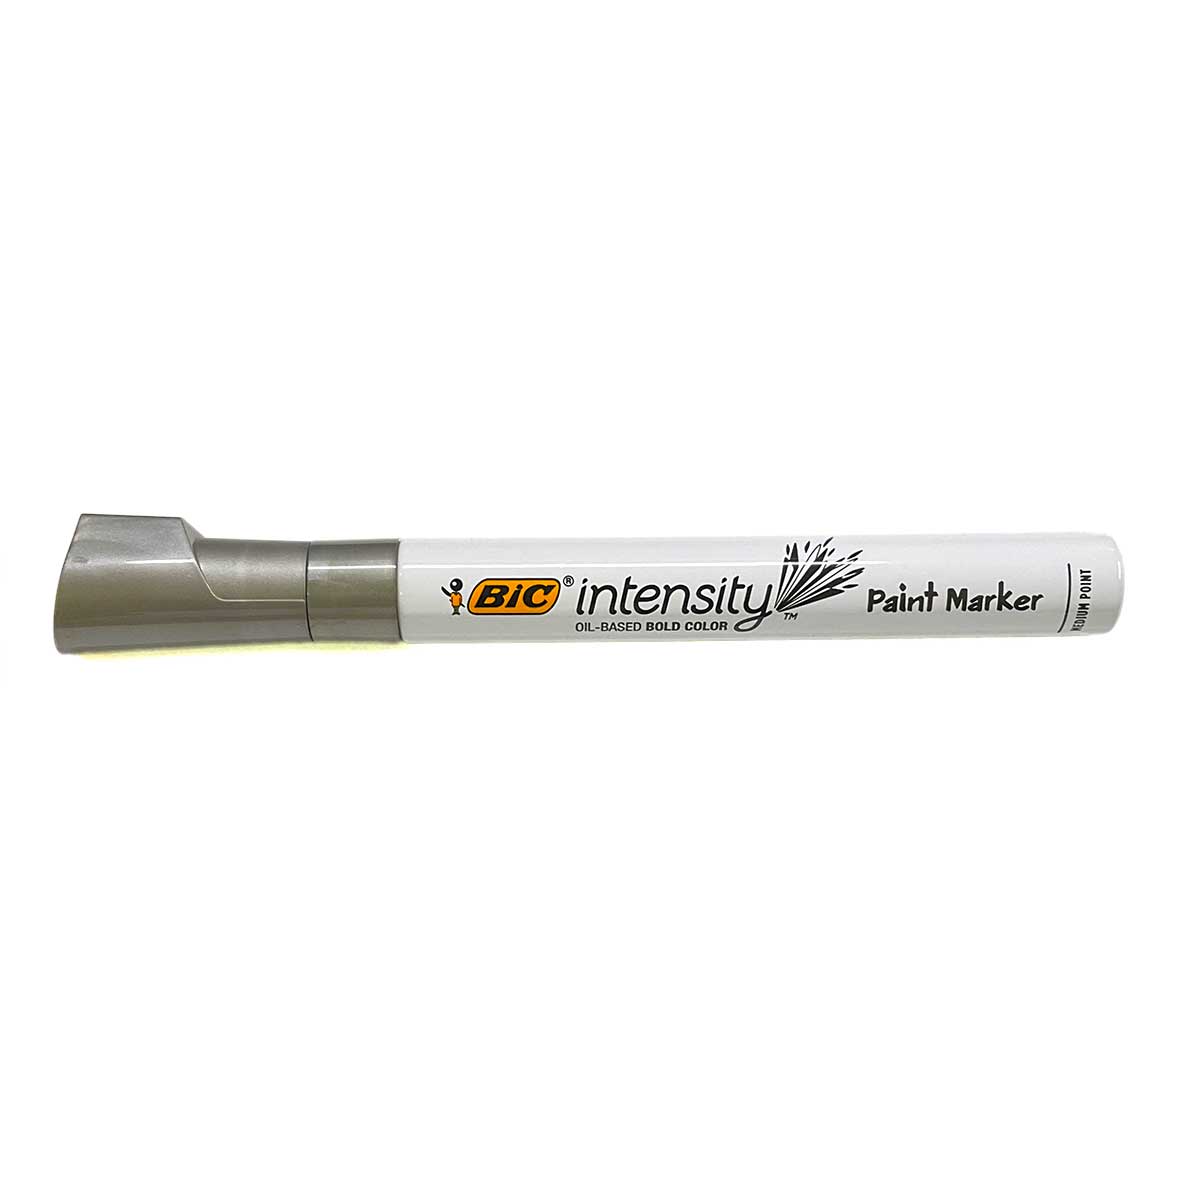 Silver Paint Marker, Bic Intensity, Oil Based